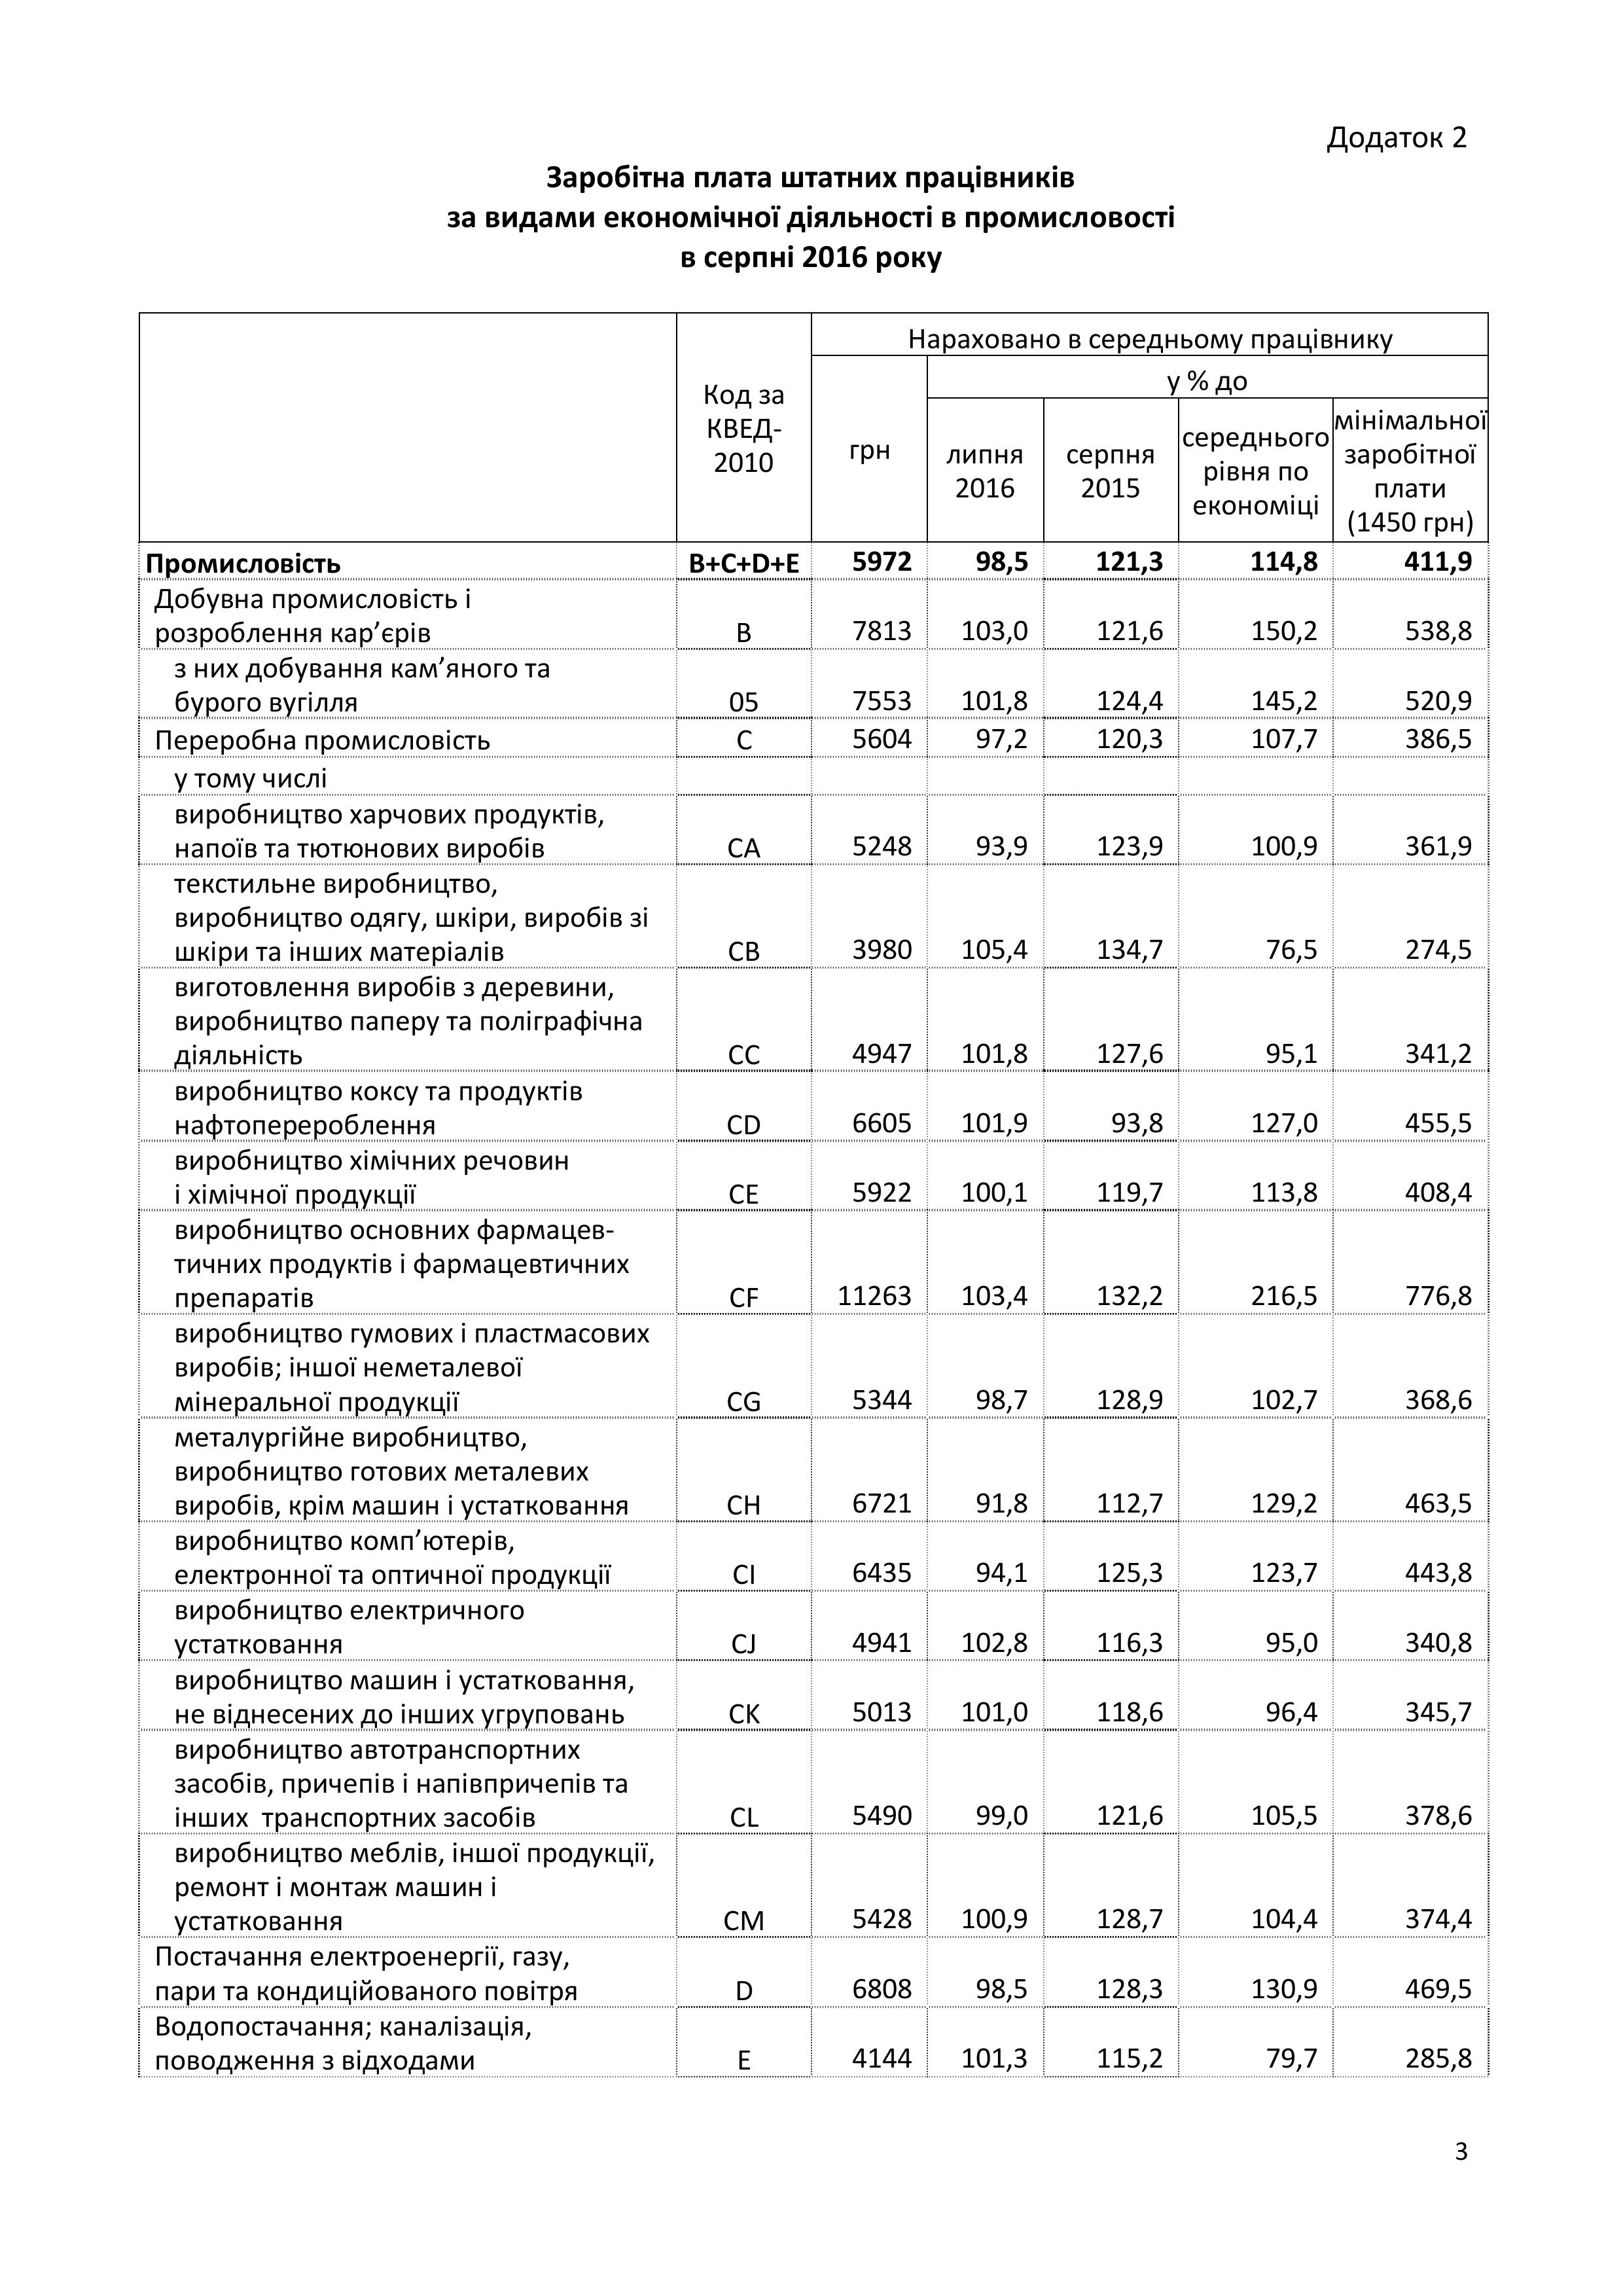 Реальна зарплата українців за рік зросла на 15% - фото 3